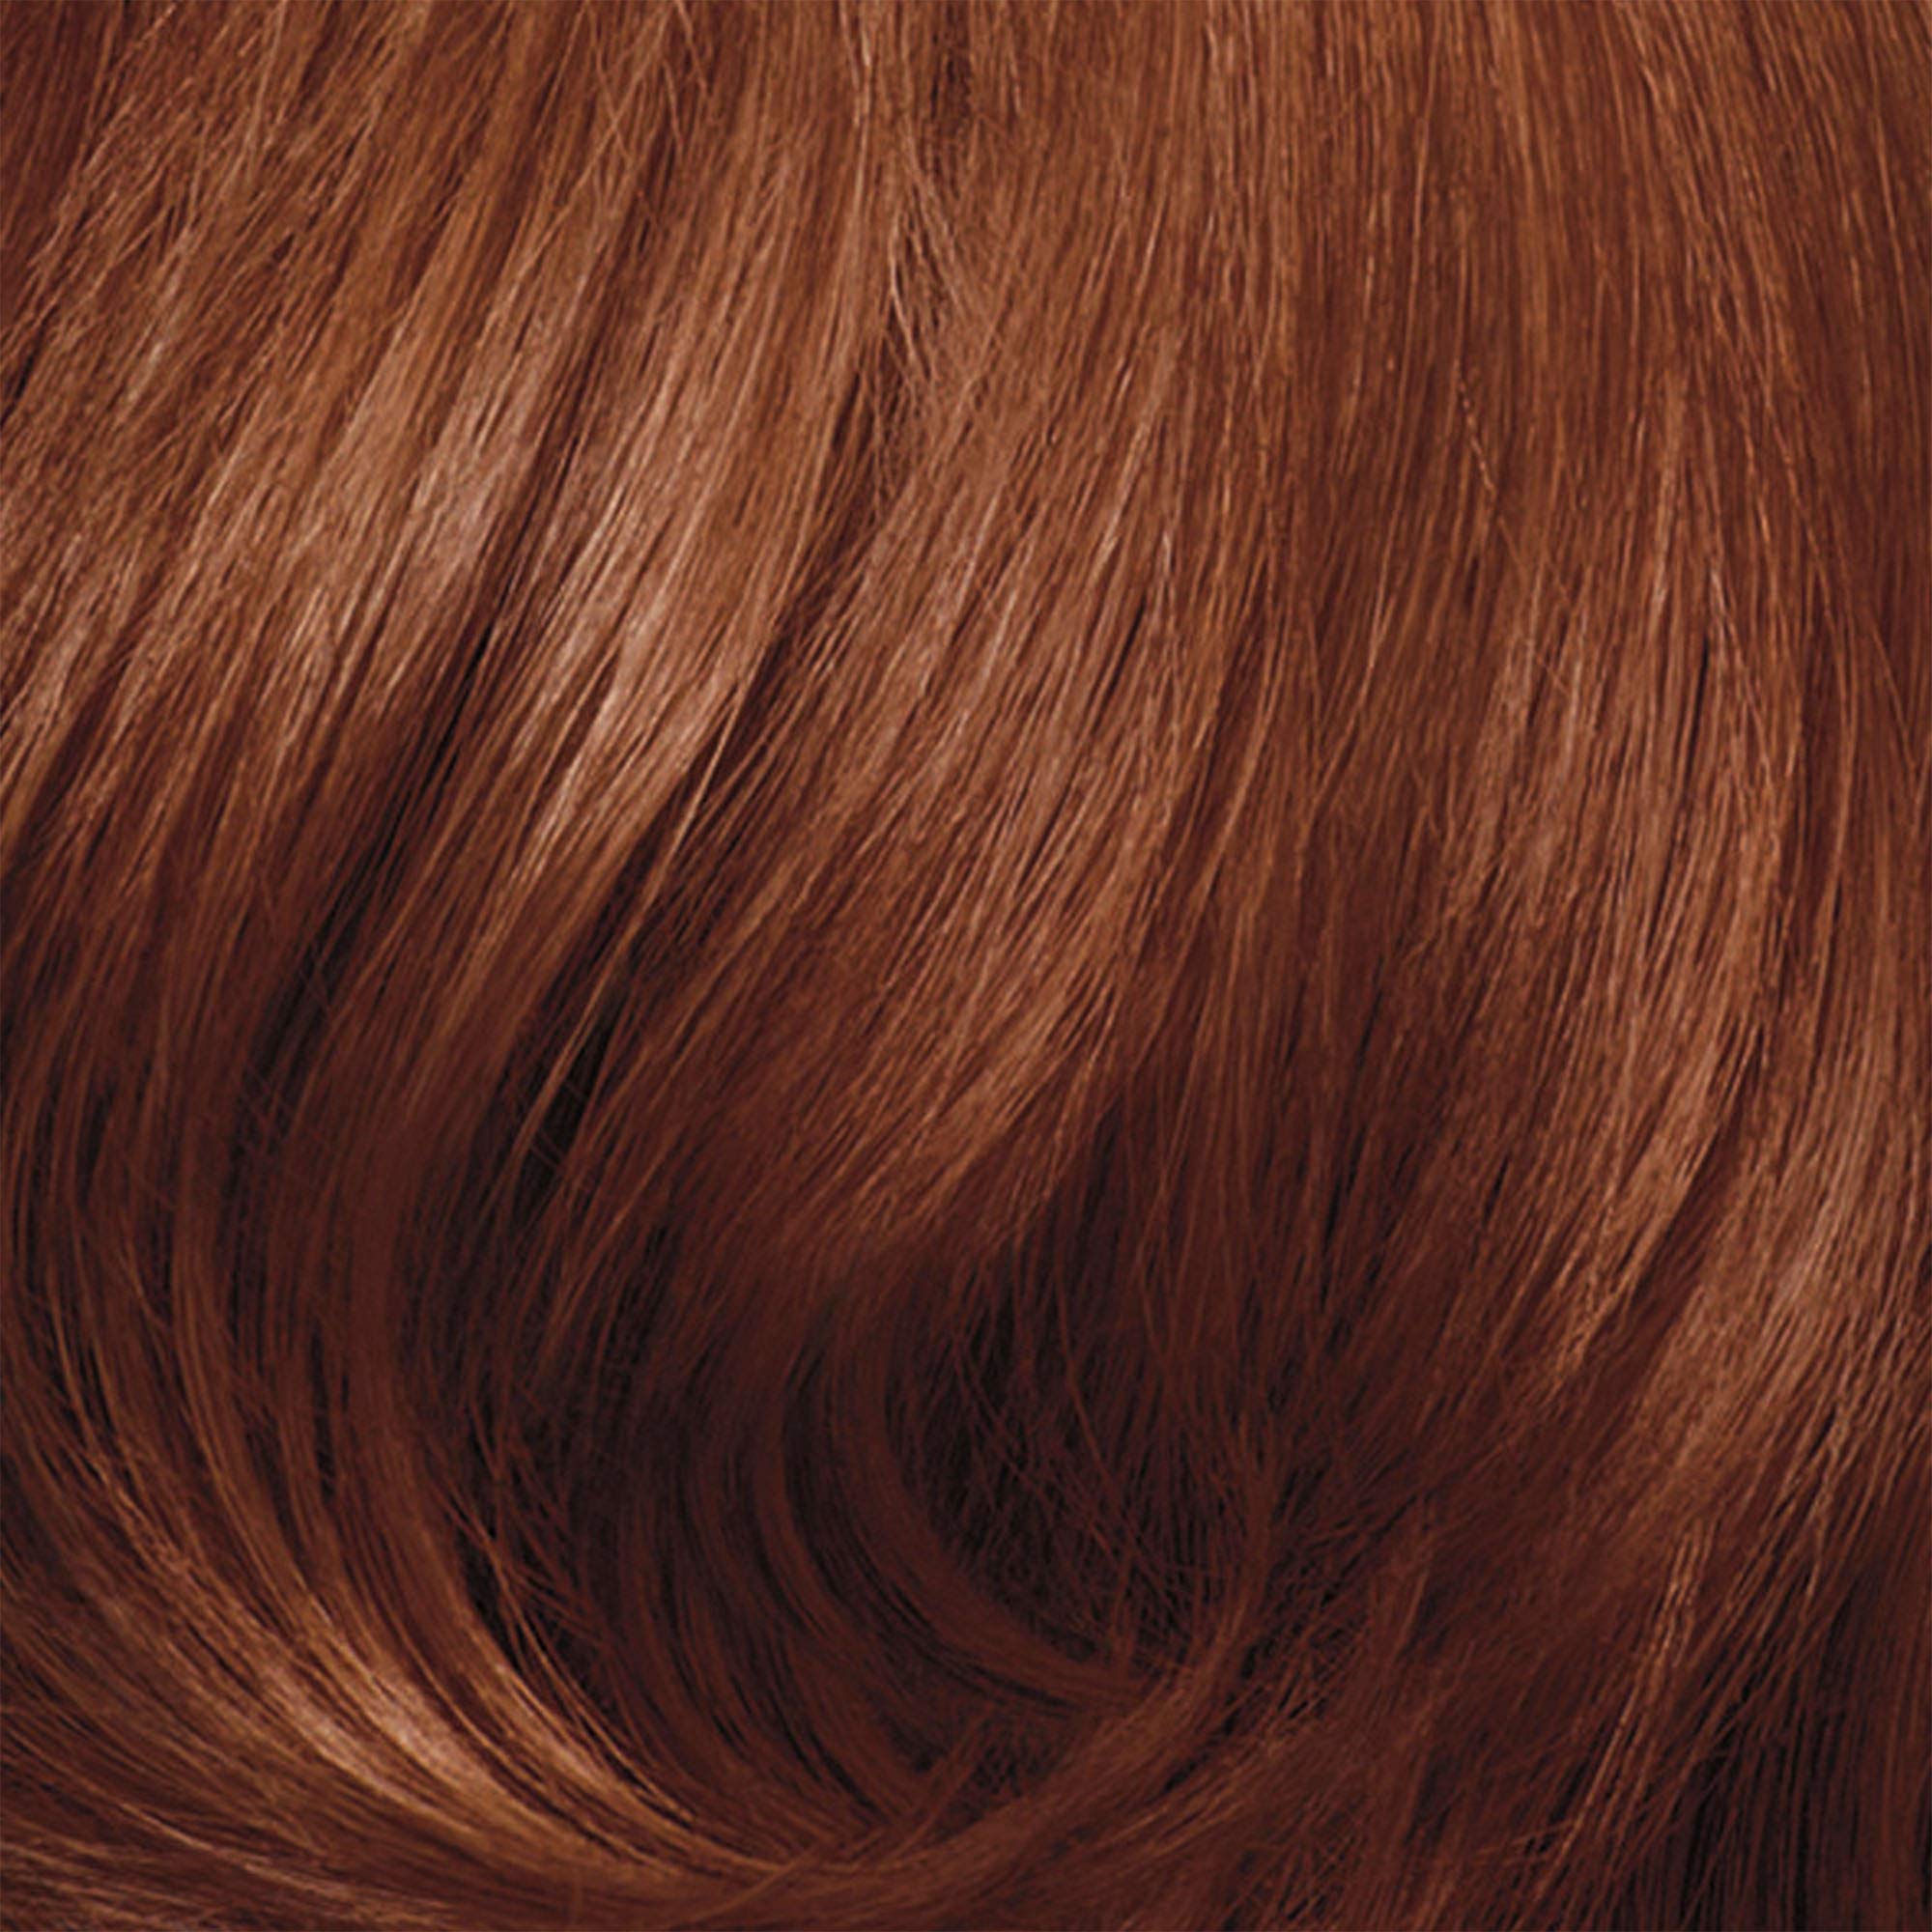 Clairol Nice'n Easy Perfect 10 Permanent Hair Dye, 6R Light Auburn Hair Color, Pack of 1